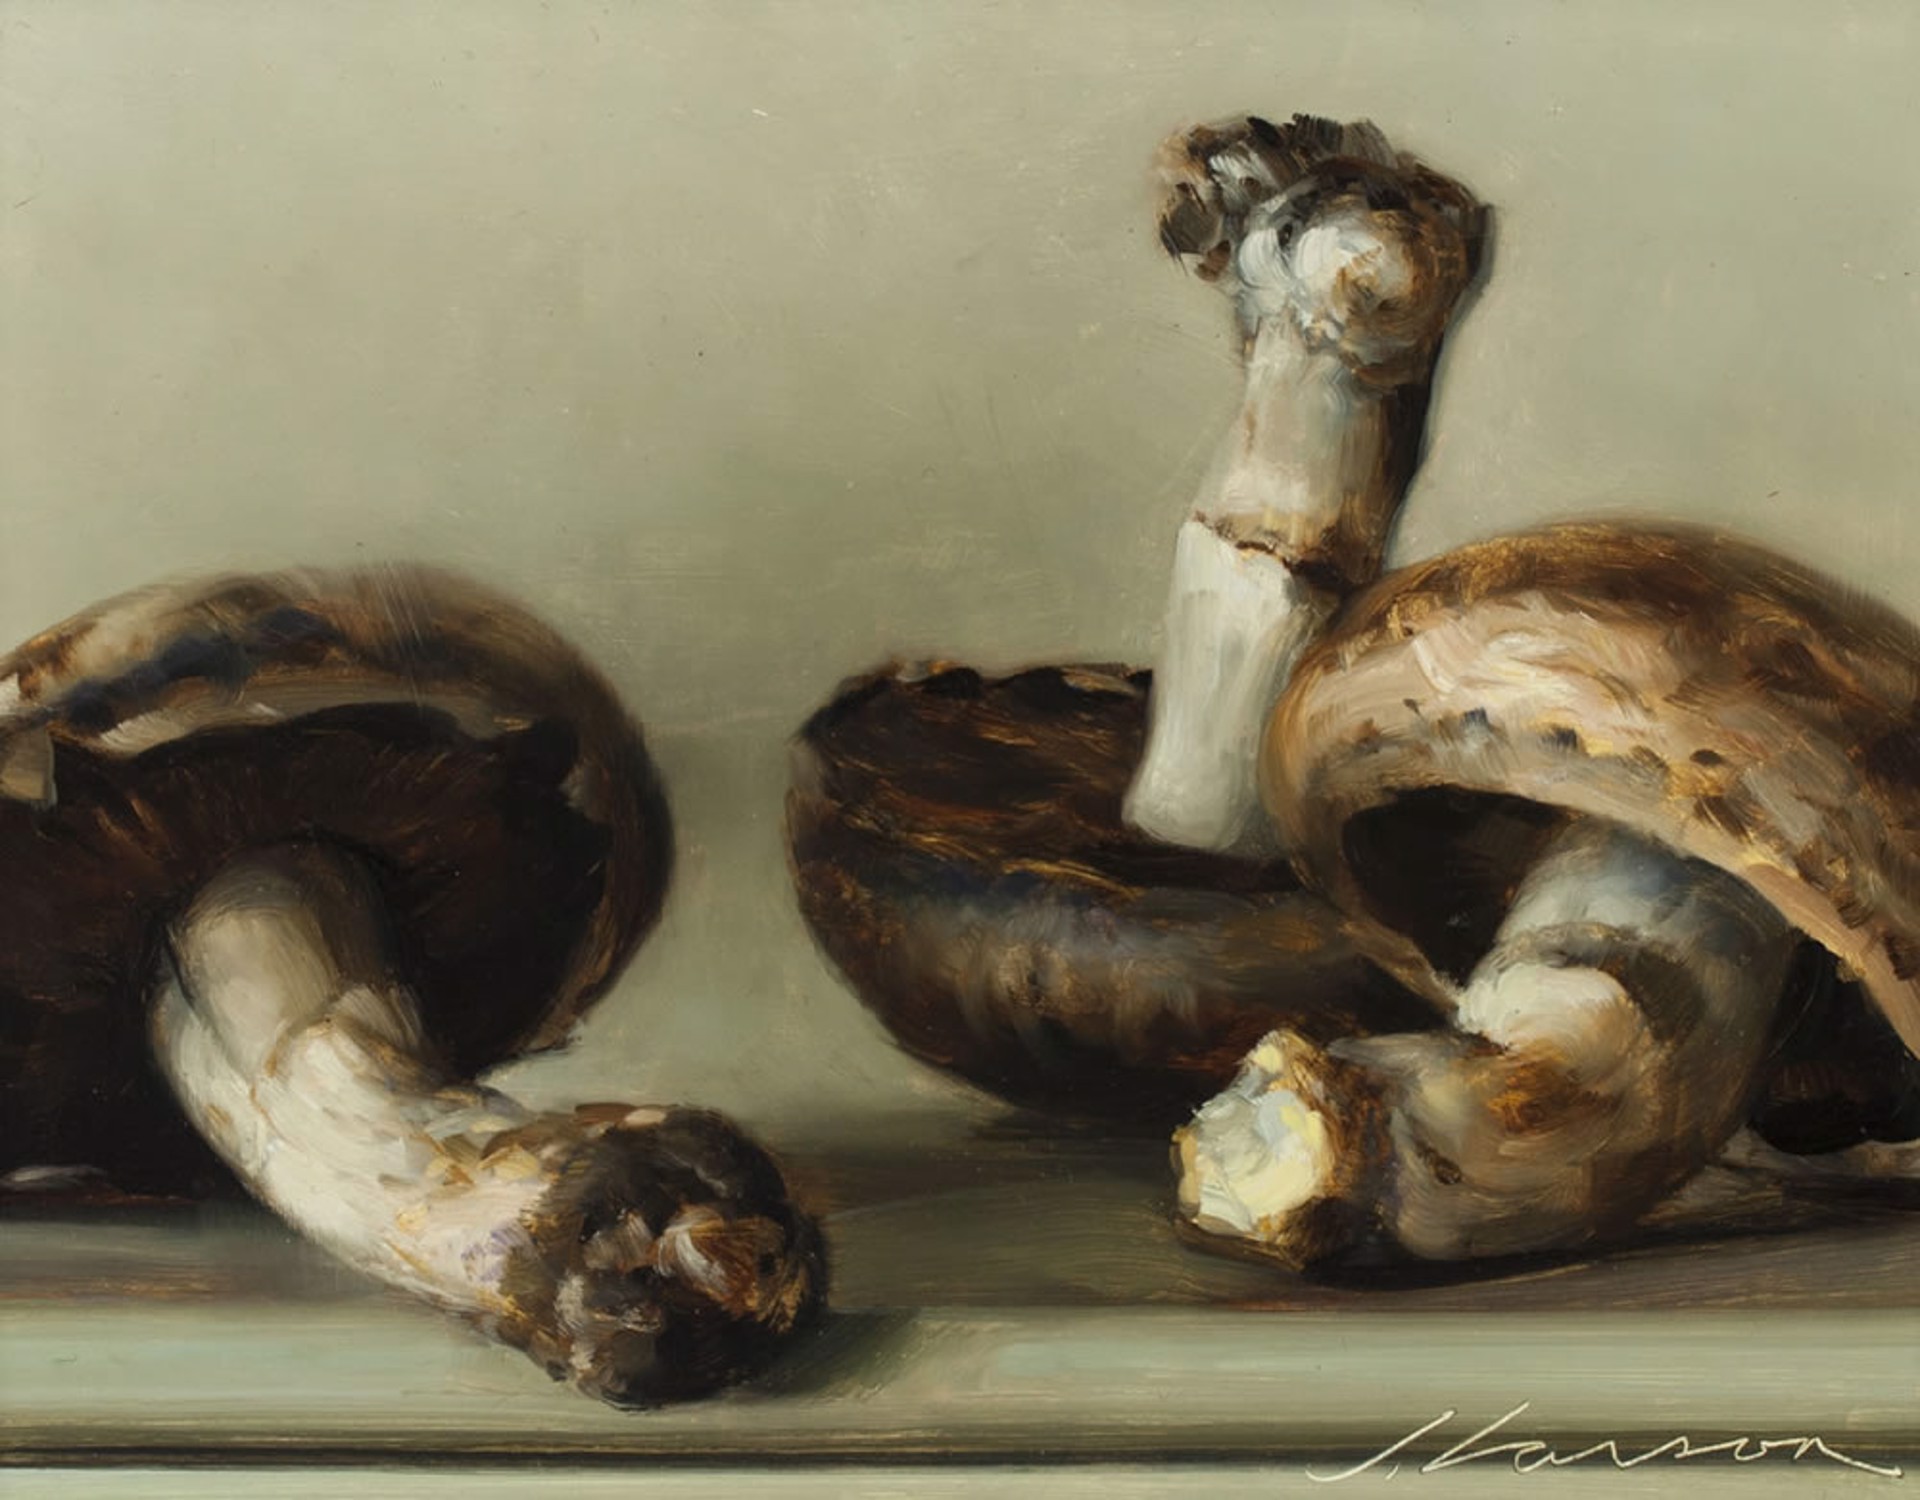 Portobello Mushrooms by Jeffrey T. Larson